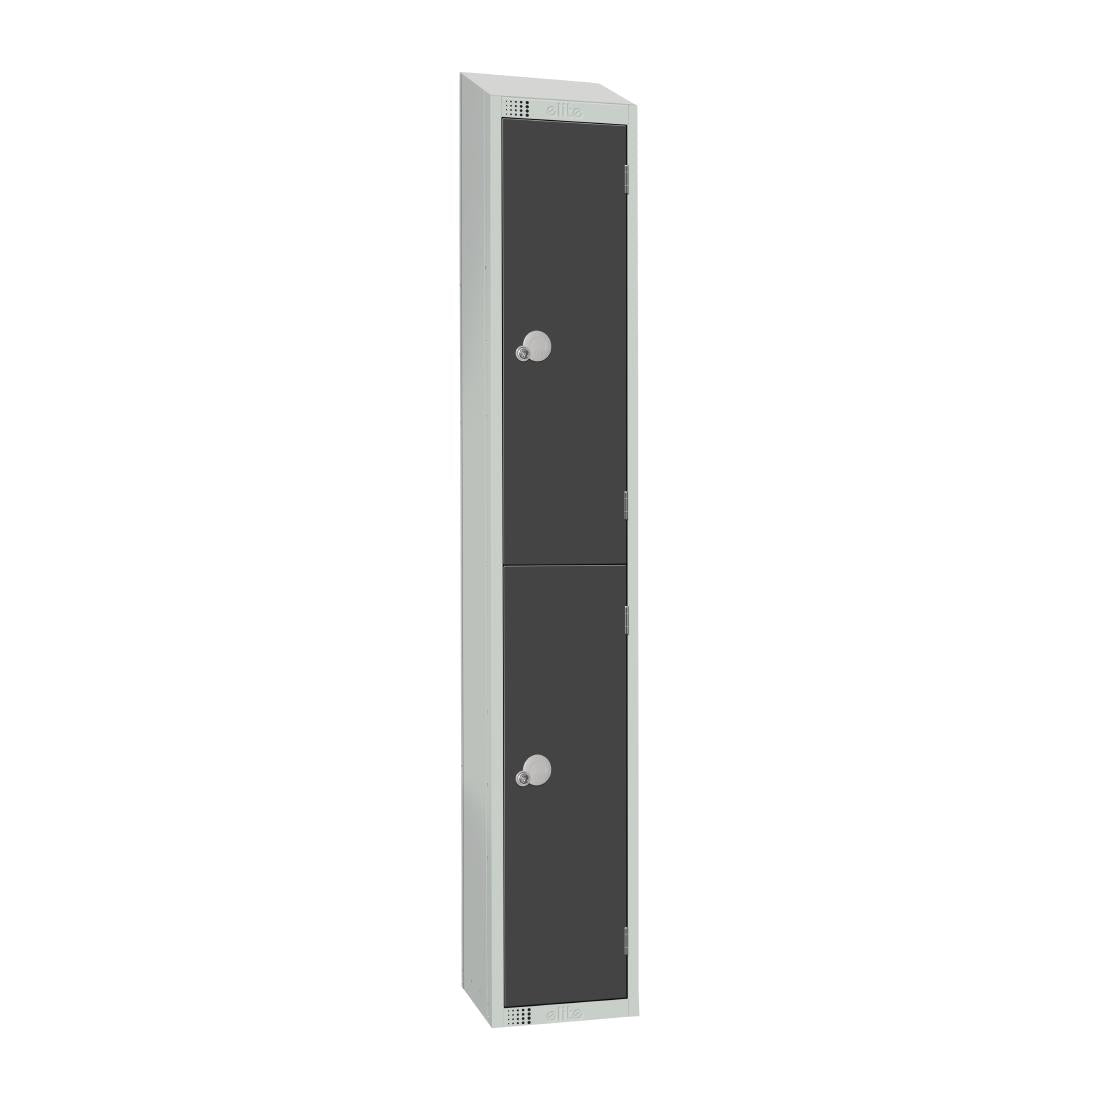 GR678-ELS Elite Double Door Electronic Combination Locker with Sloping Top Graphite Grey JD Catering Equipment Solutions Ltd